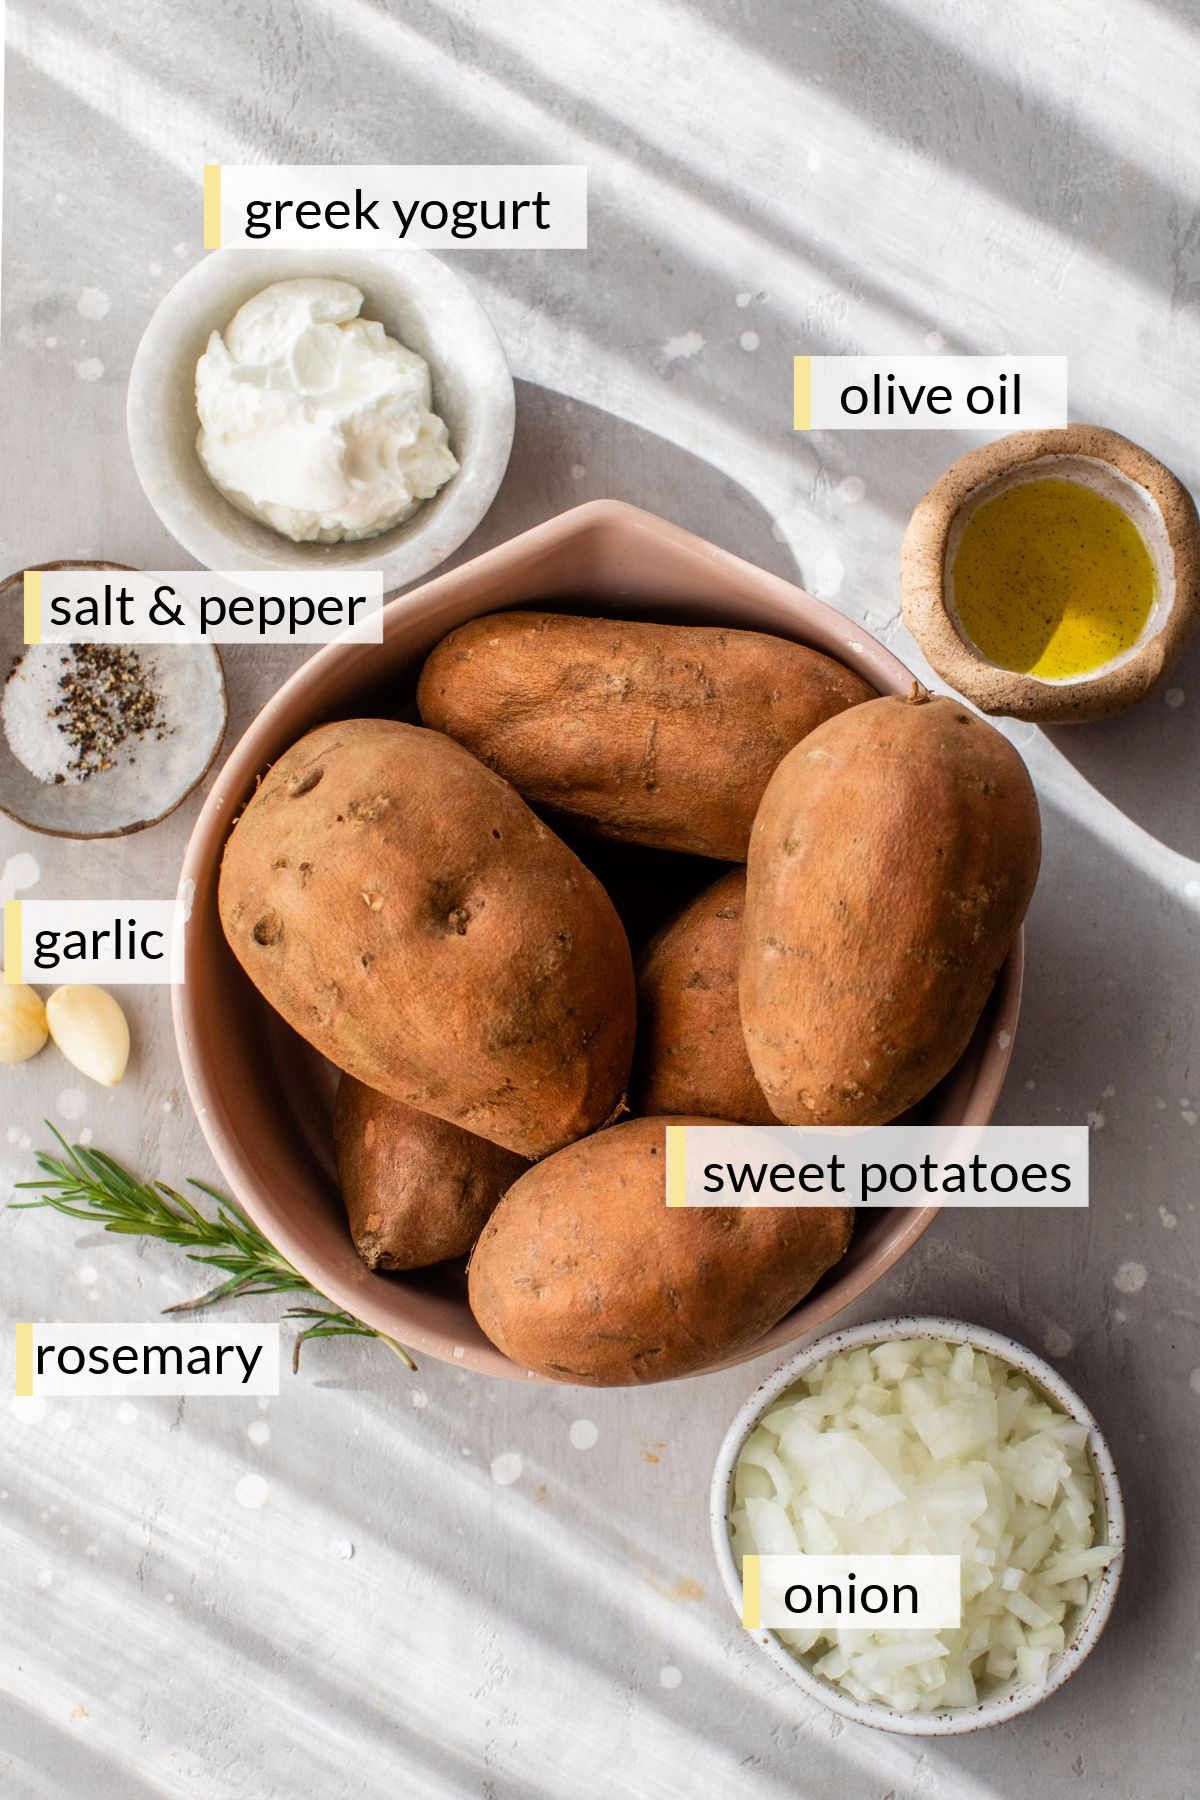 Sweet potatoes, Greek yogurt, olive oil, onions, rosemary, garlic and salt & pepper.